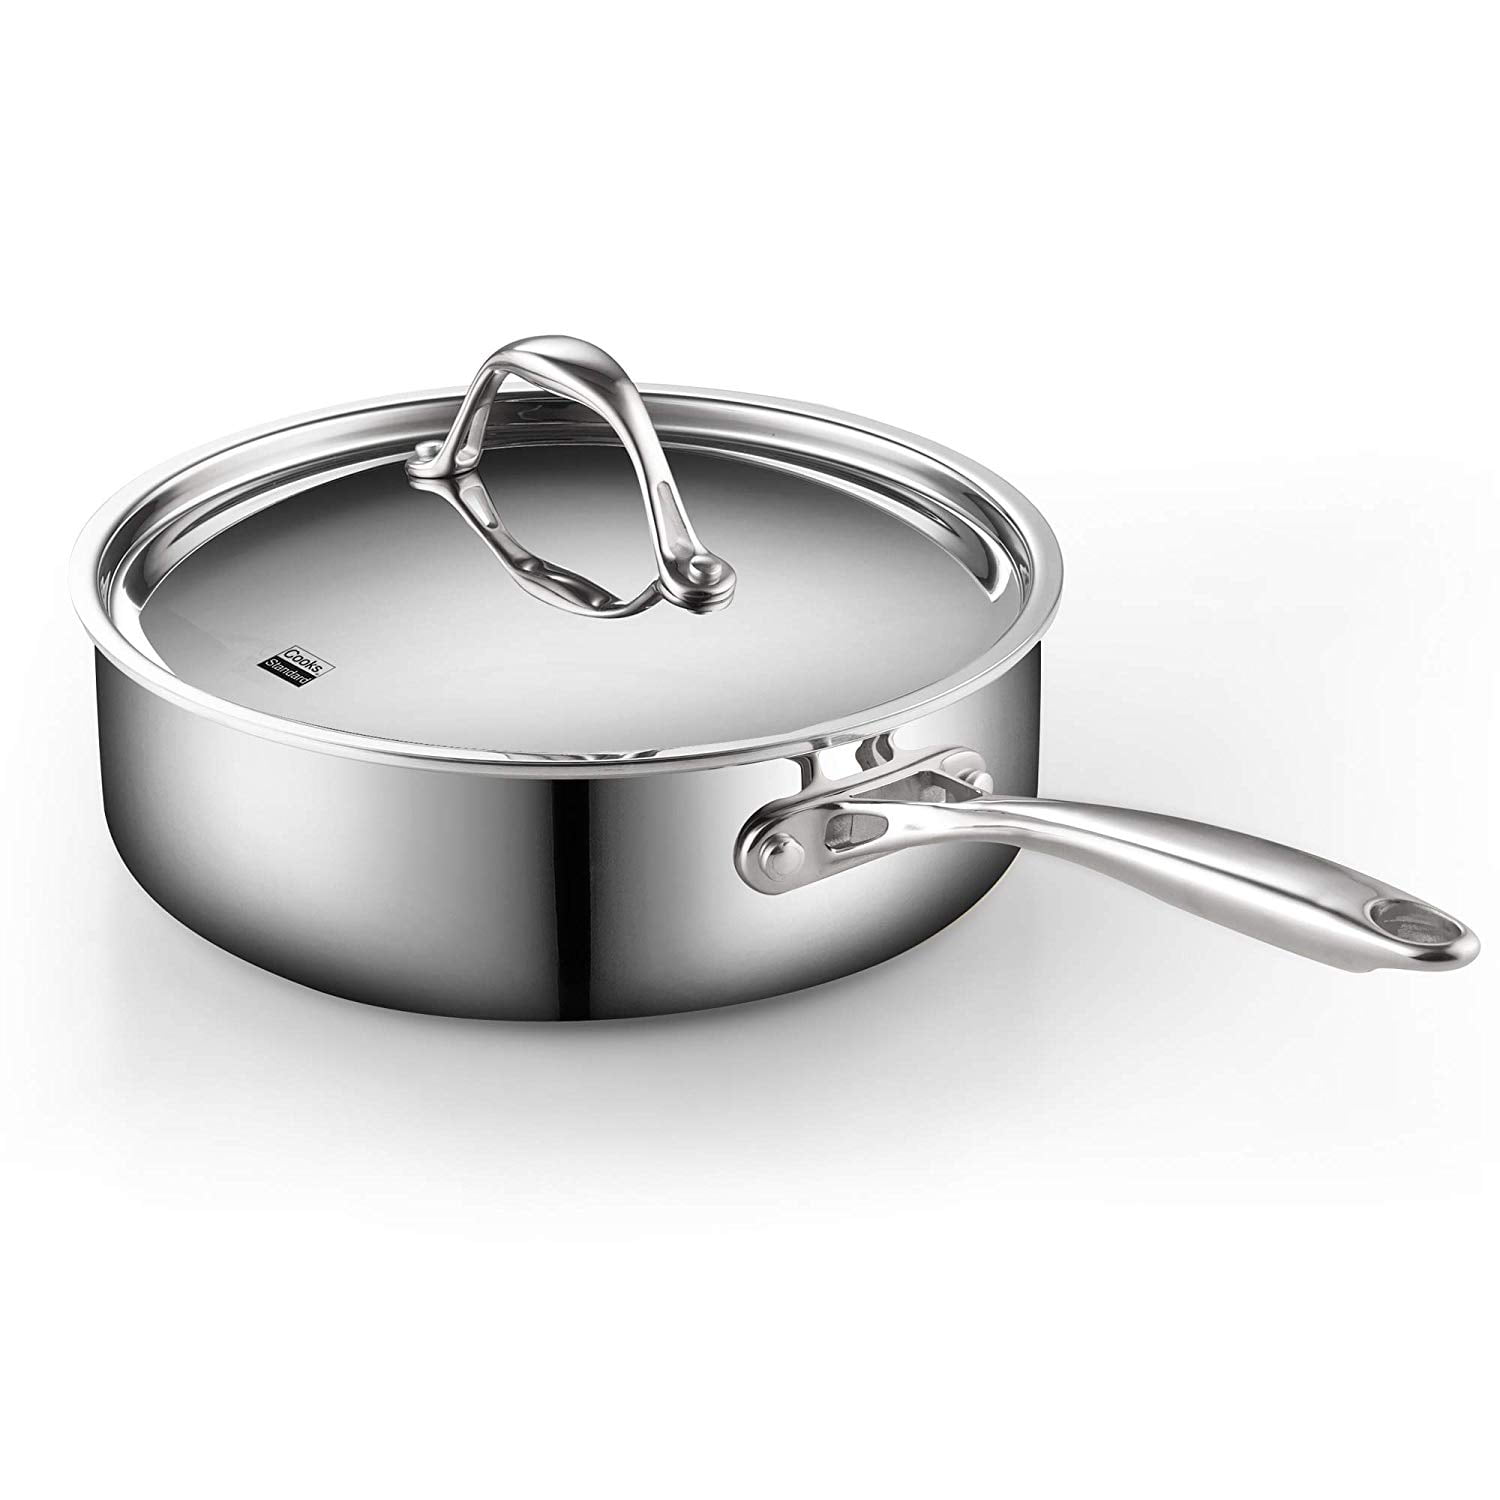 Cooks Standard 02675 Multi-Ply Clad Deep Saute Pan with Lid, 3.5-QT